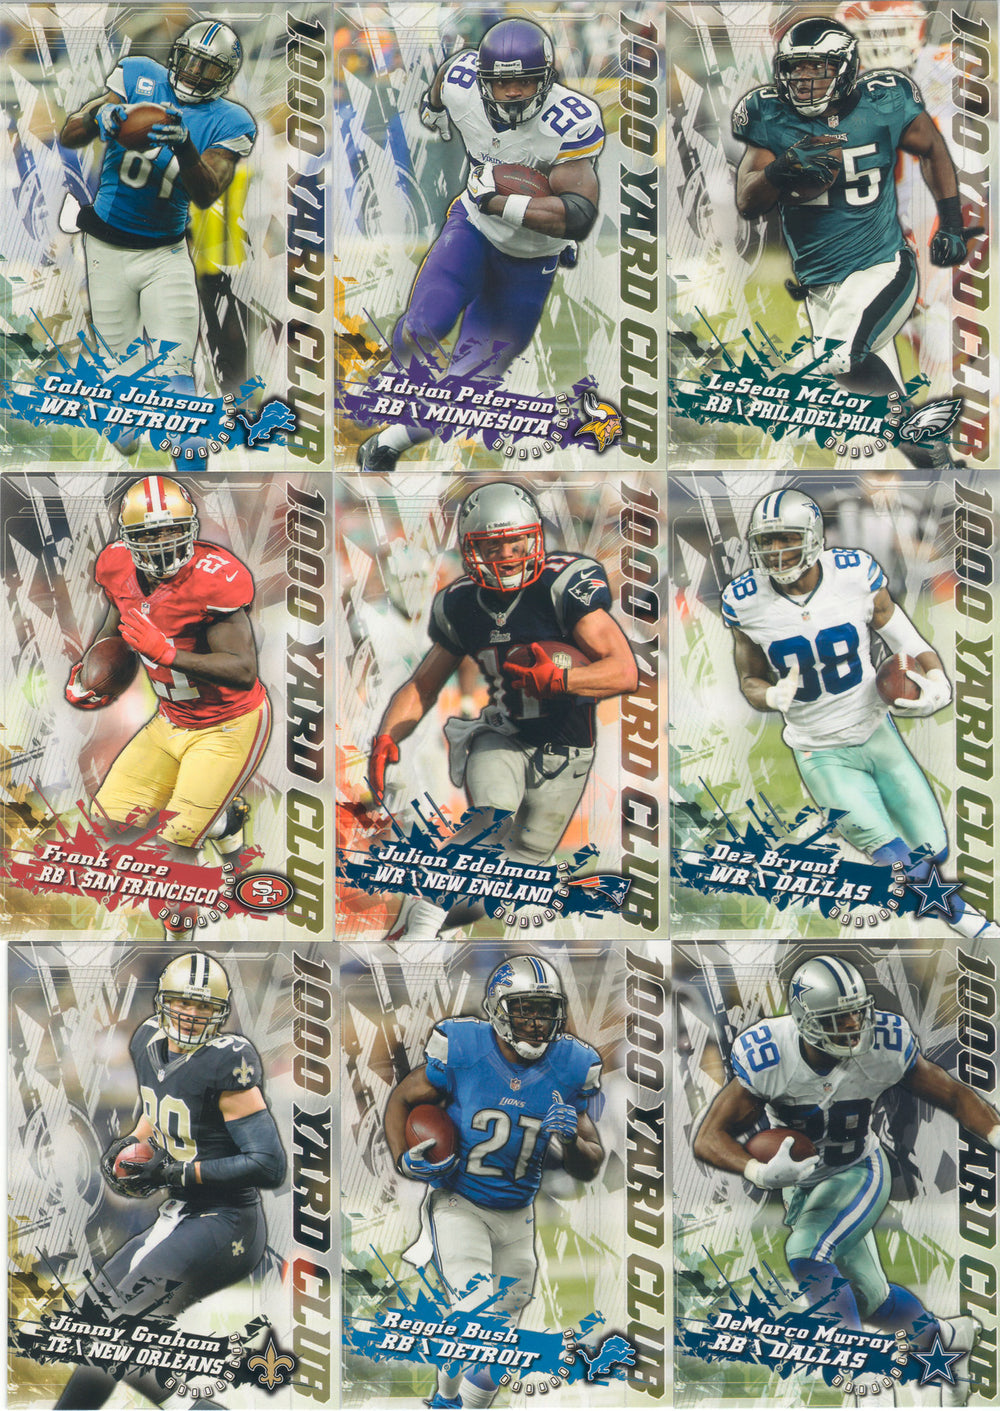 2009 Topps Football Indianapolis Colts Team Set 16 Cards at